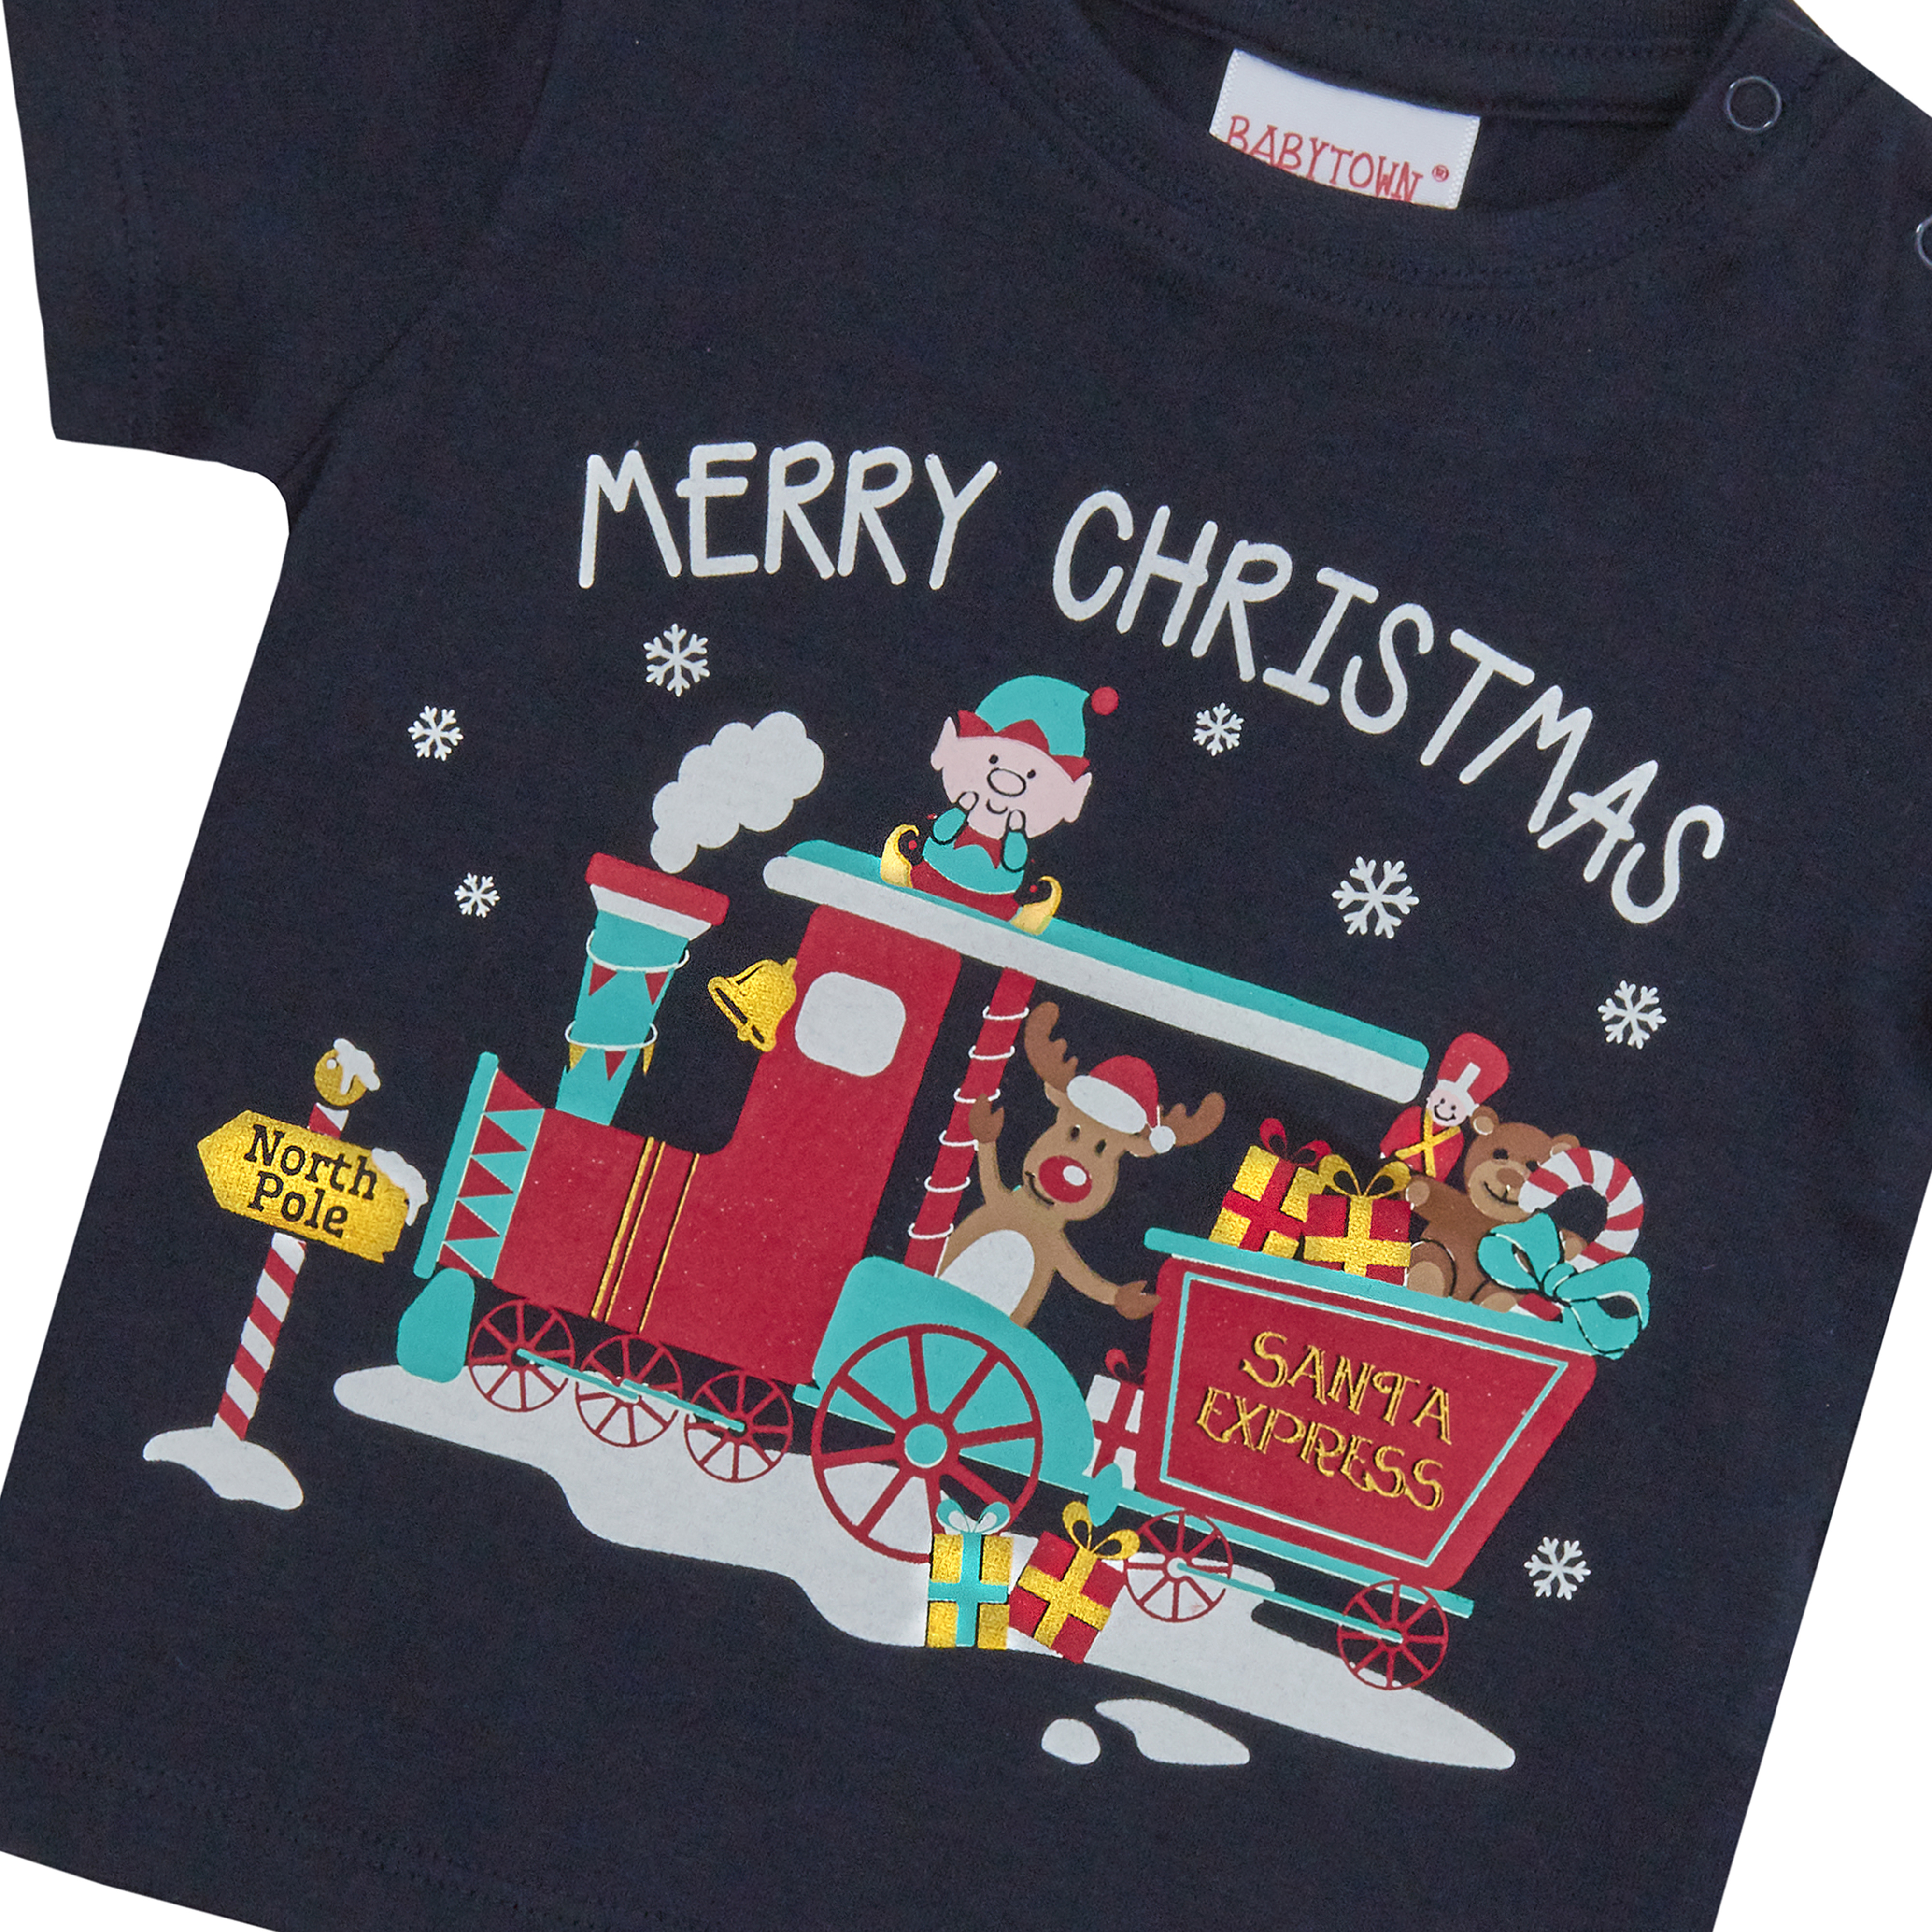 Metzuyan Baby Girls Boys Unisex Printed T-Shirts Christmas Novelty Design 3-24 Months